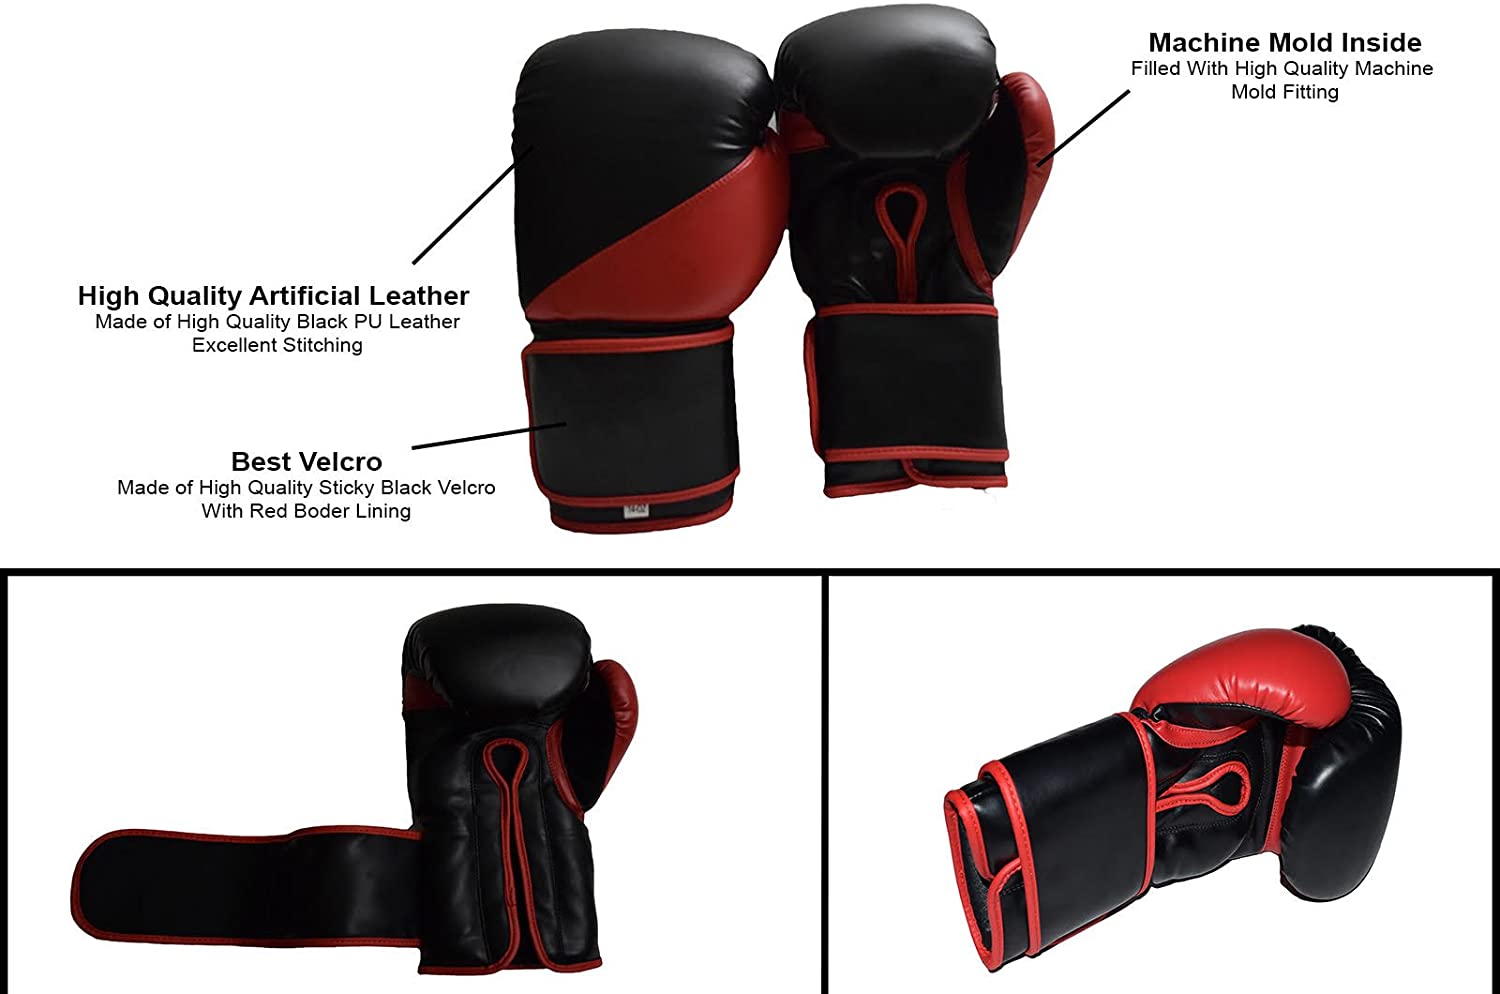 B Baosity Kickboxing Focus Pad Boxing Gloves Martial Arts Fight MMA Mittens 